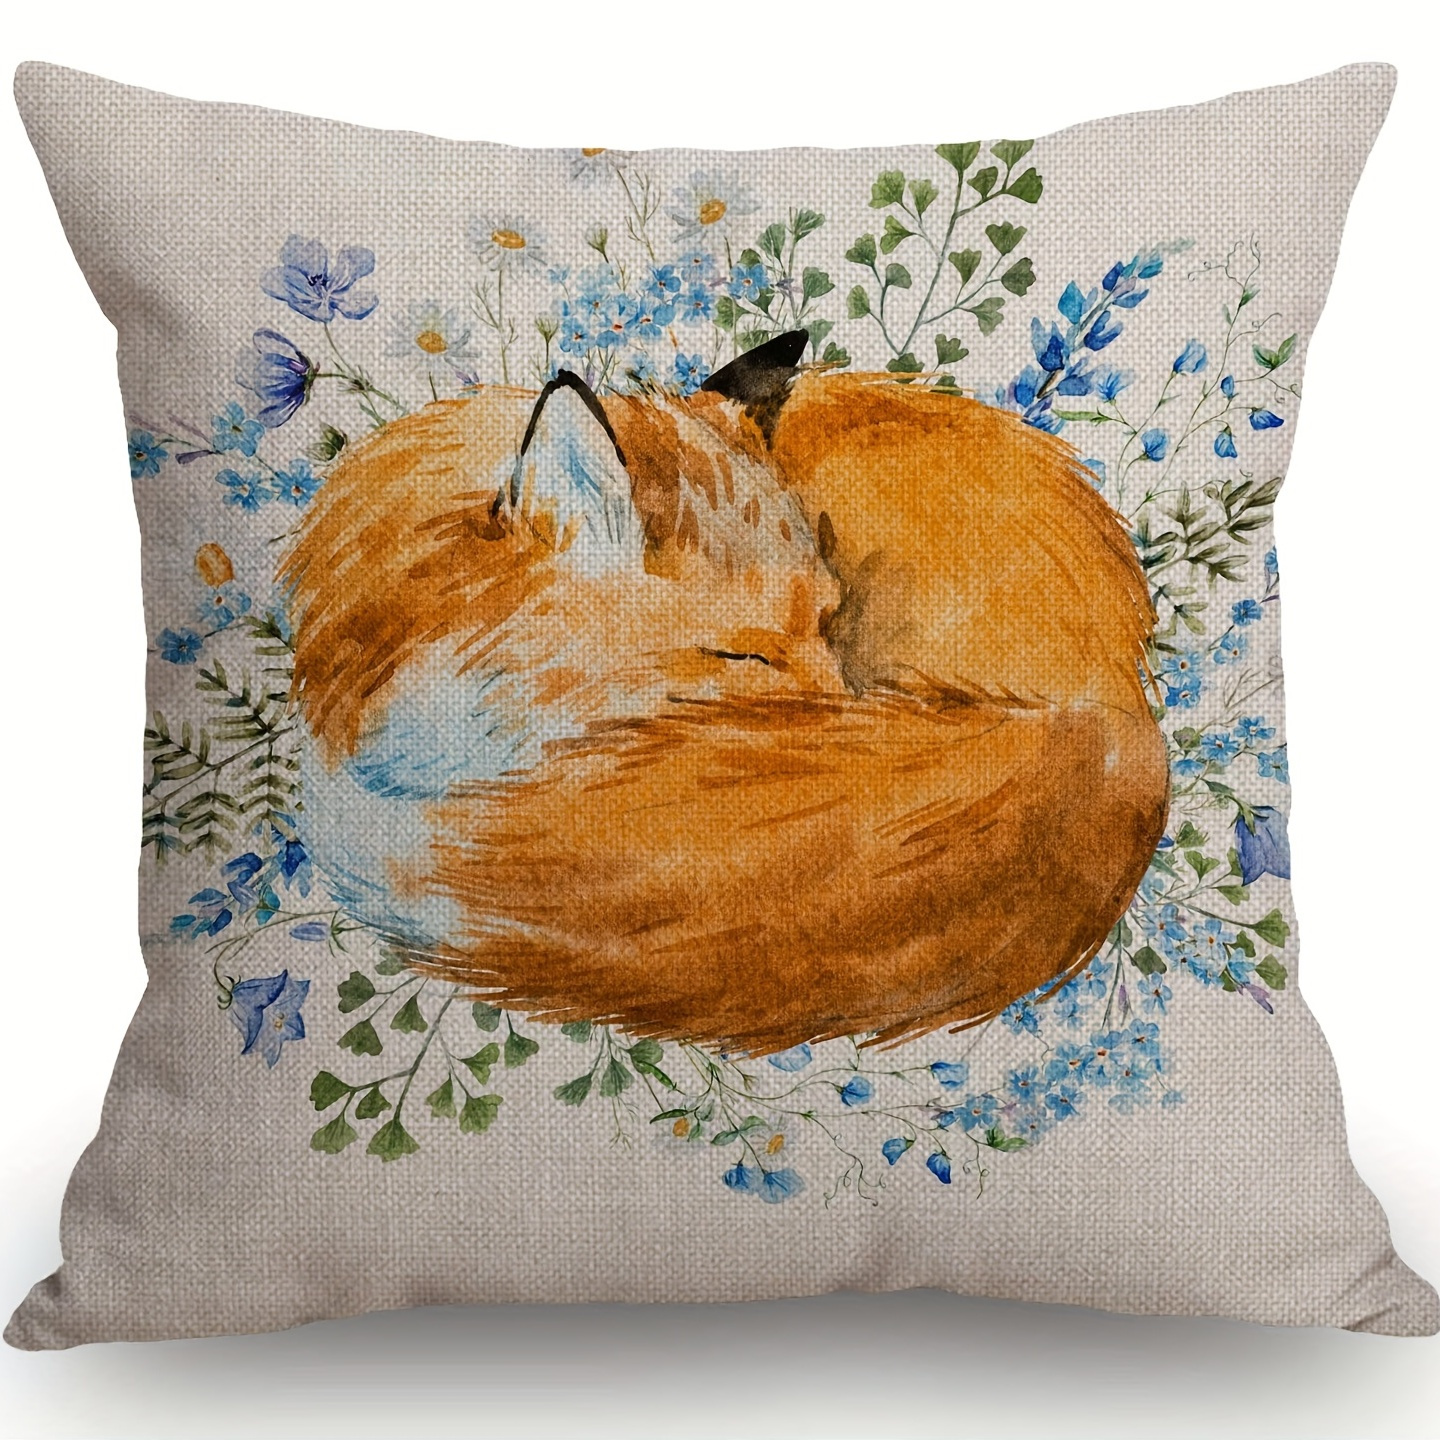 

1pc Farmhouse Style Watercolor Sleeping Fox Throw Pillow Cover - Soft Cotton Linen Cushion Case For Home Decor - 18x18 Inch